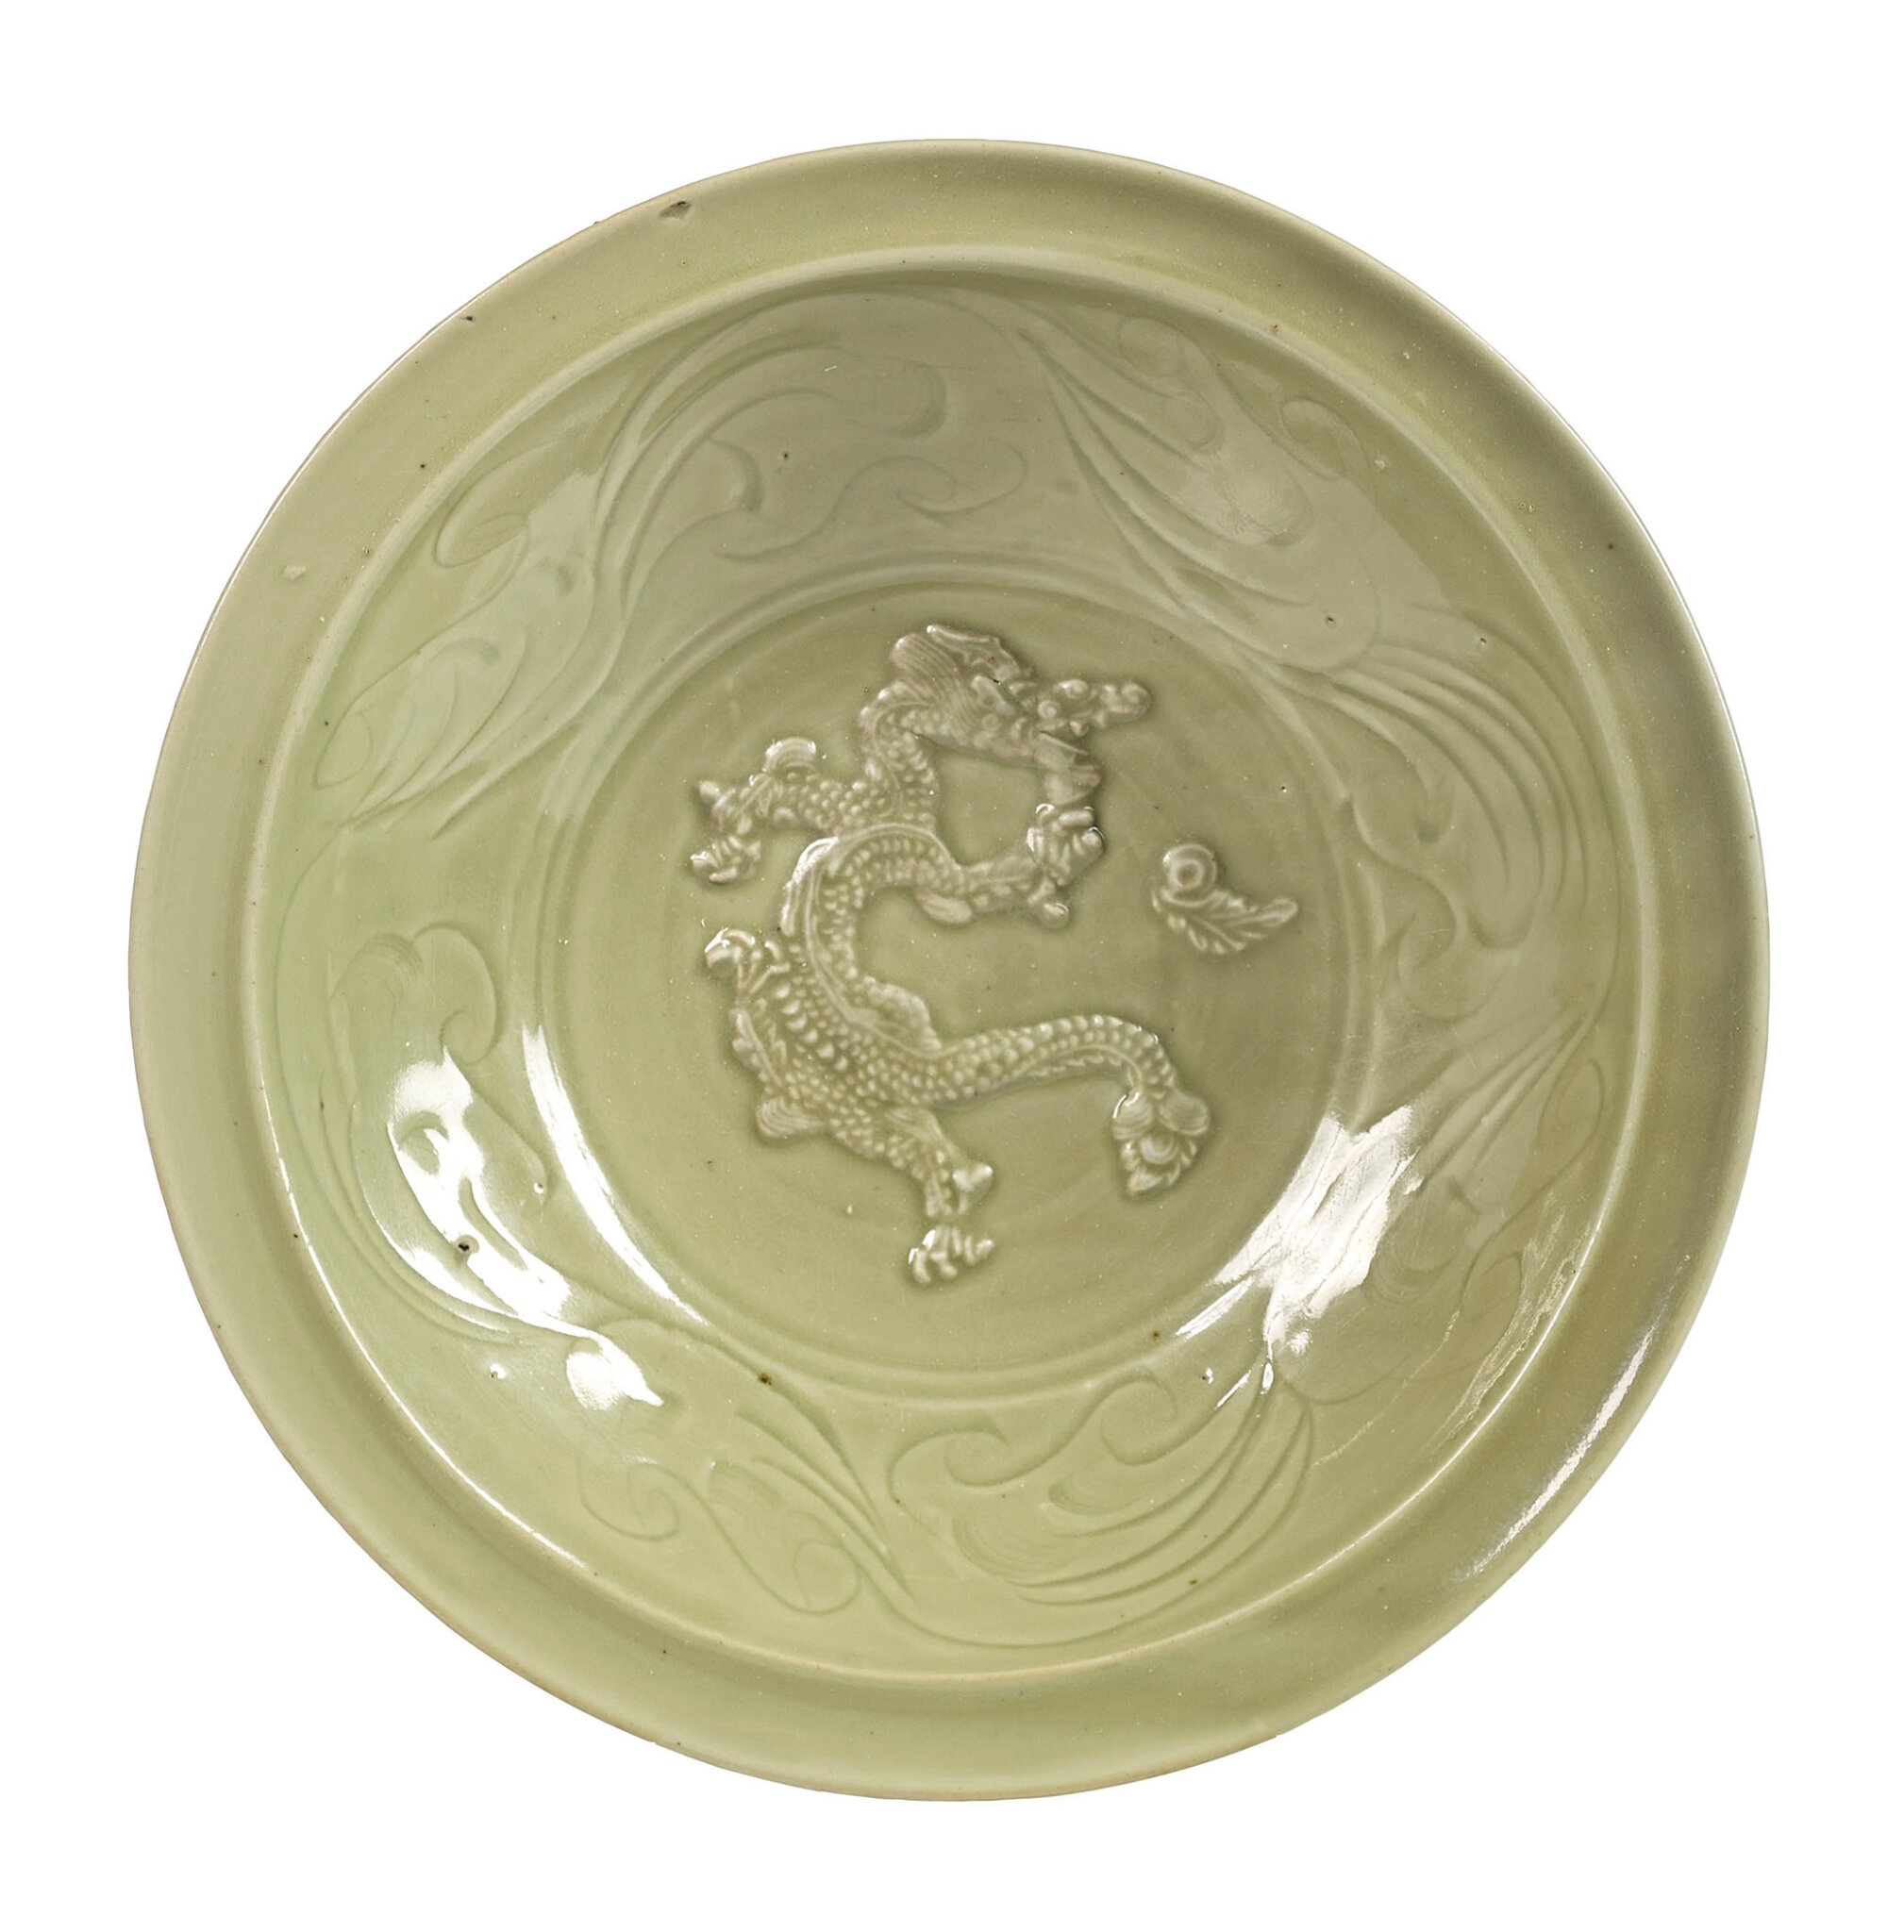 A large celadon Longquan dish, China, Yuan-Ming dynasties, 14th century